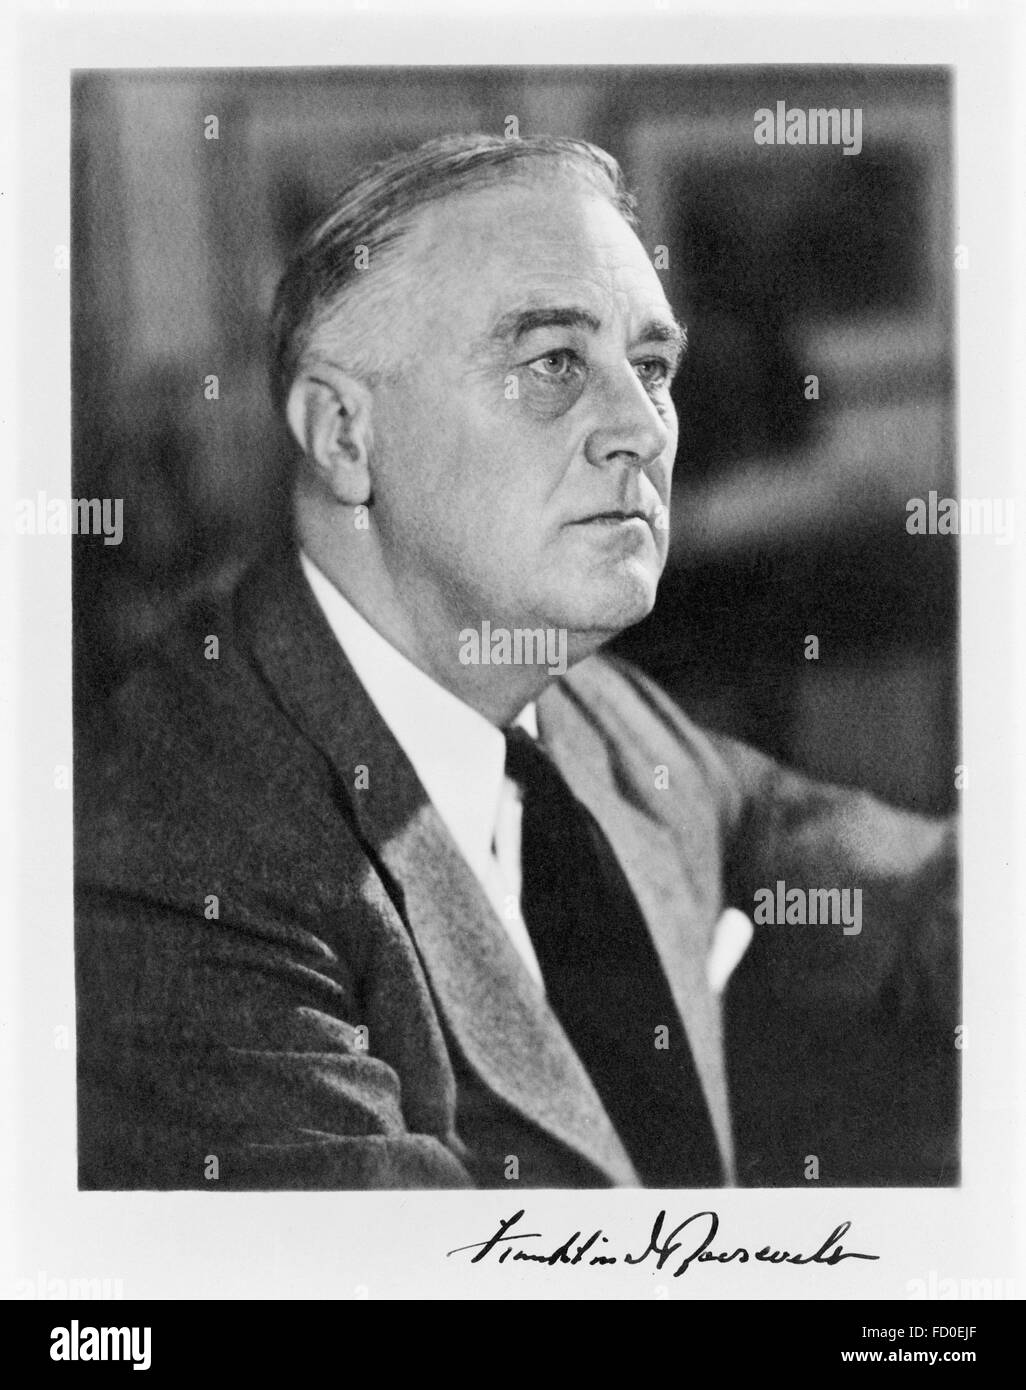 Franklin D Roosevelt. Signed portrait of Franklin D Roosevelt, the 32nd President of the USA, c. 1941 Stock Photo